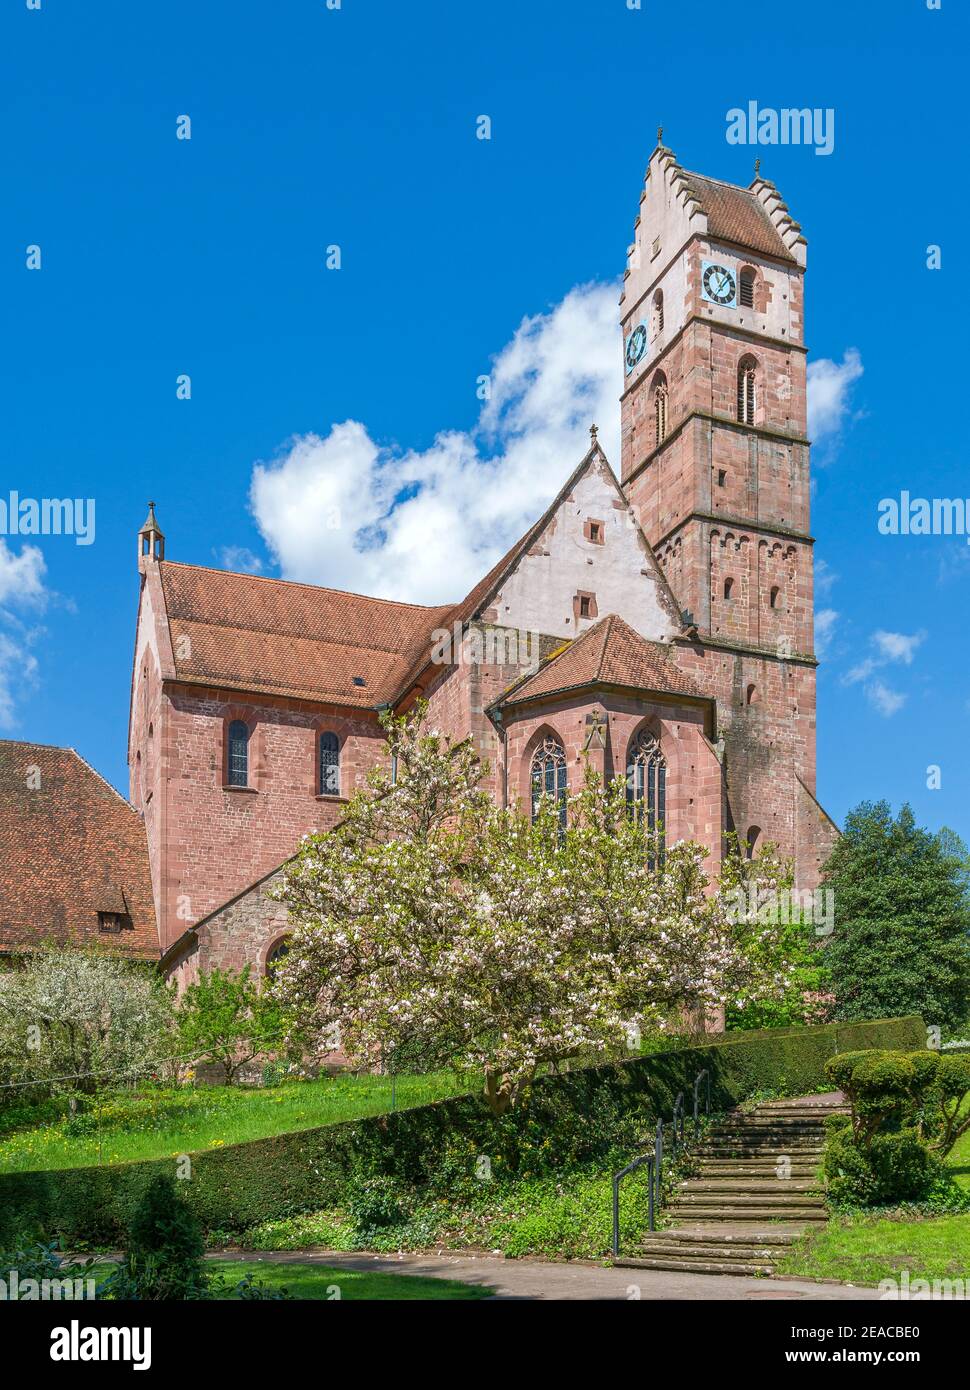 Germania, Baden-Württemberg, Alpirsbach, Alpirsbach chiesa monastero, romanico, 11 ° secolo, ex monastero benedettino. Foto Stock